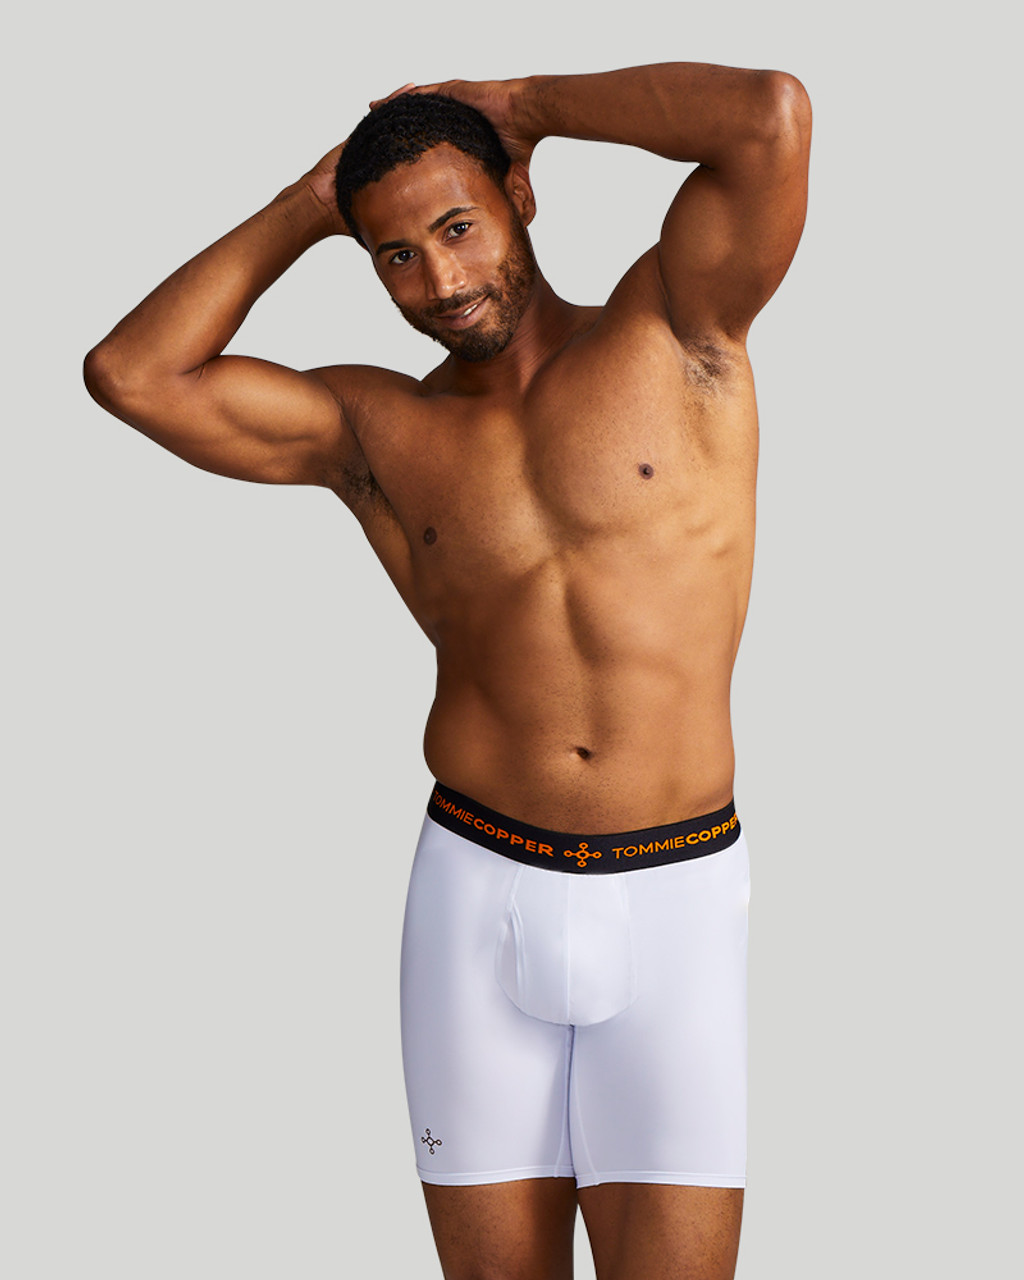 Men's Support Underwear  Shop Pain Relief at Tommie Copper®